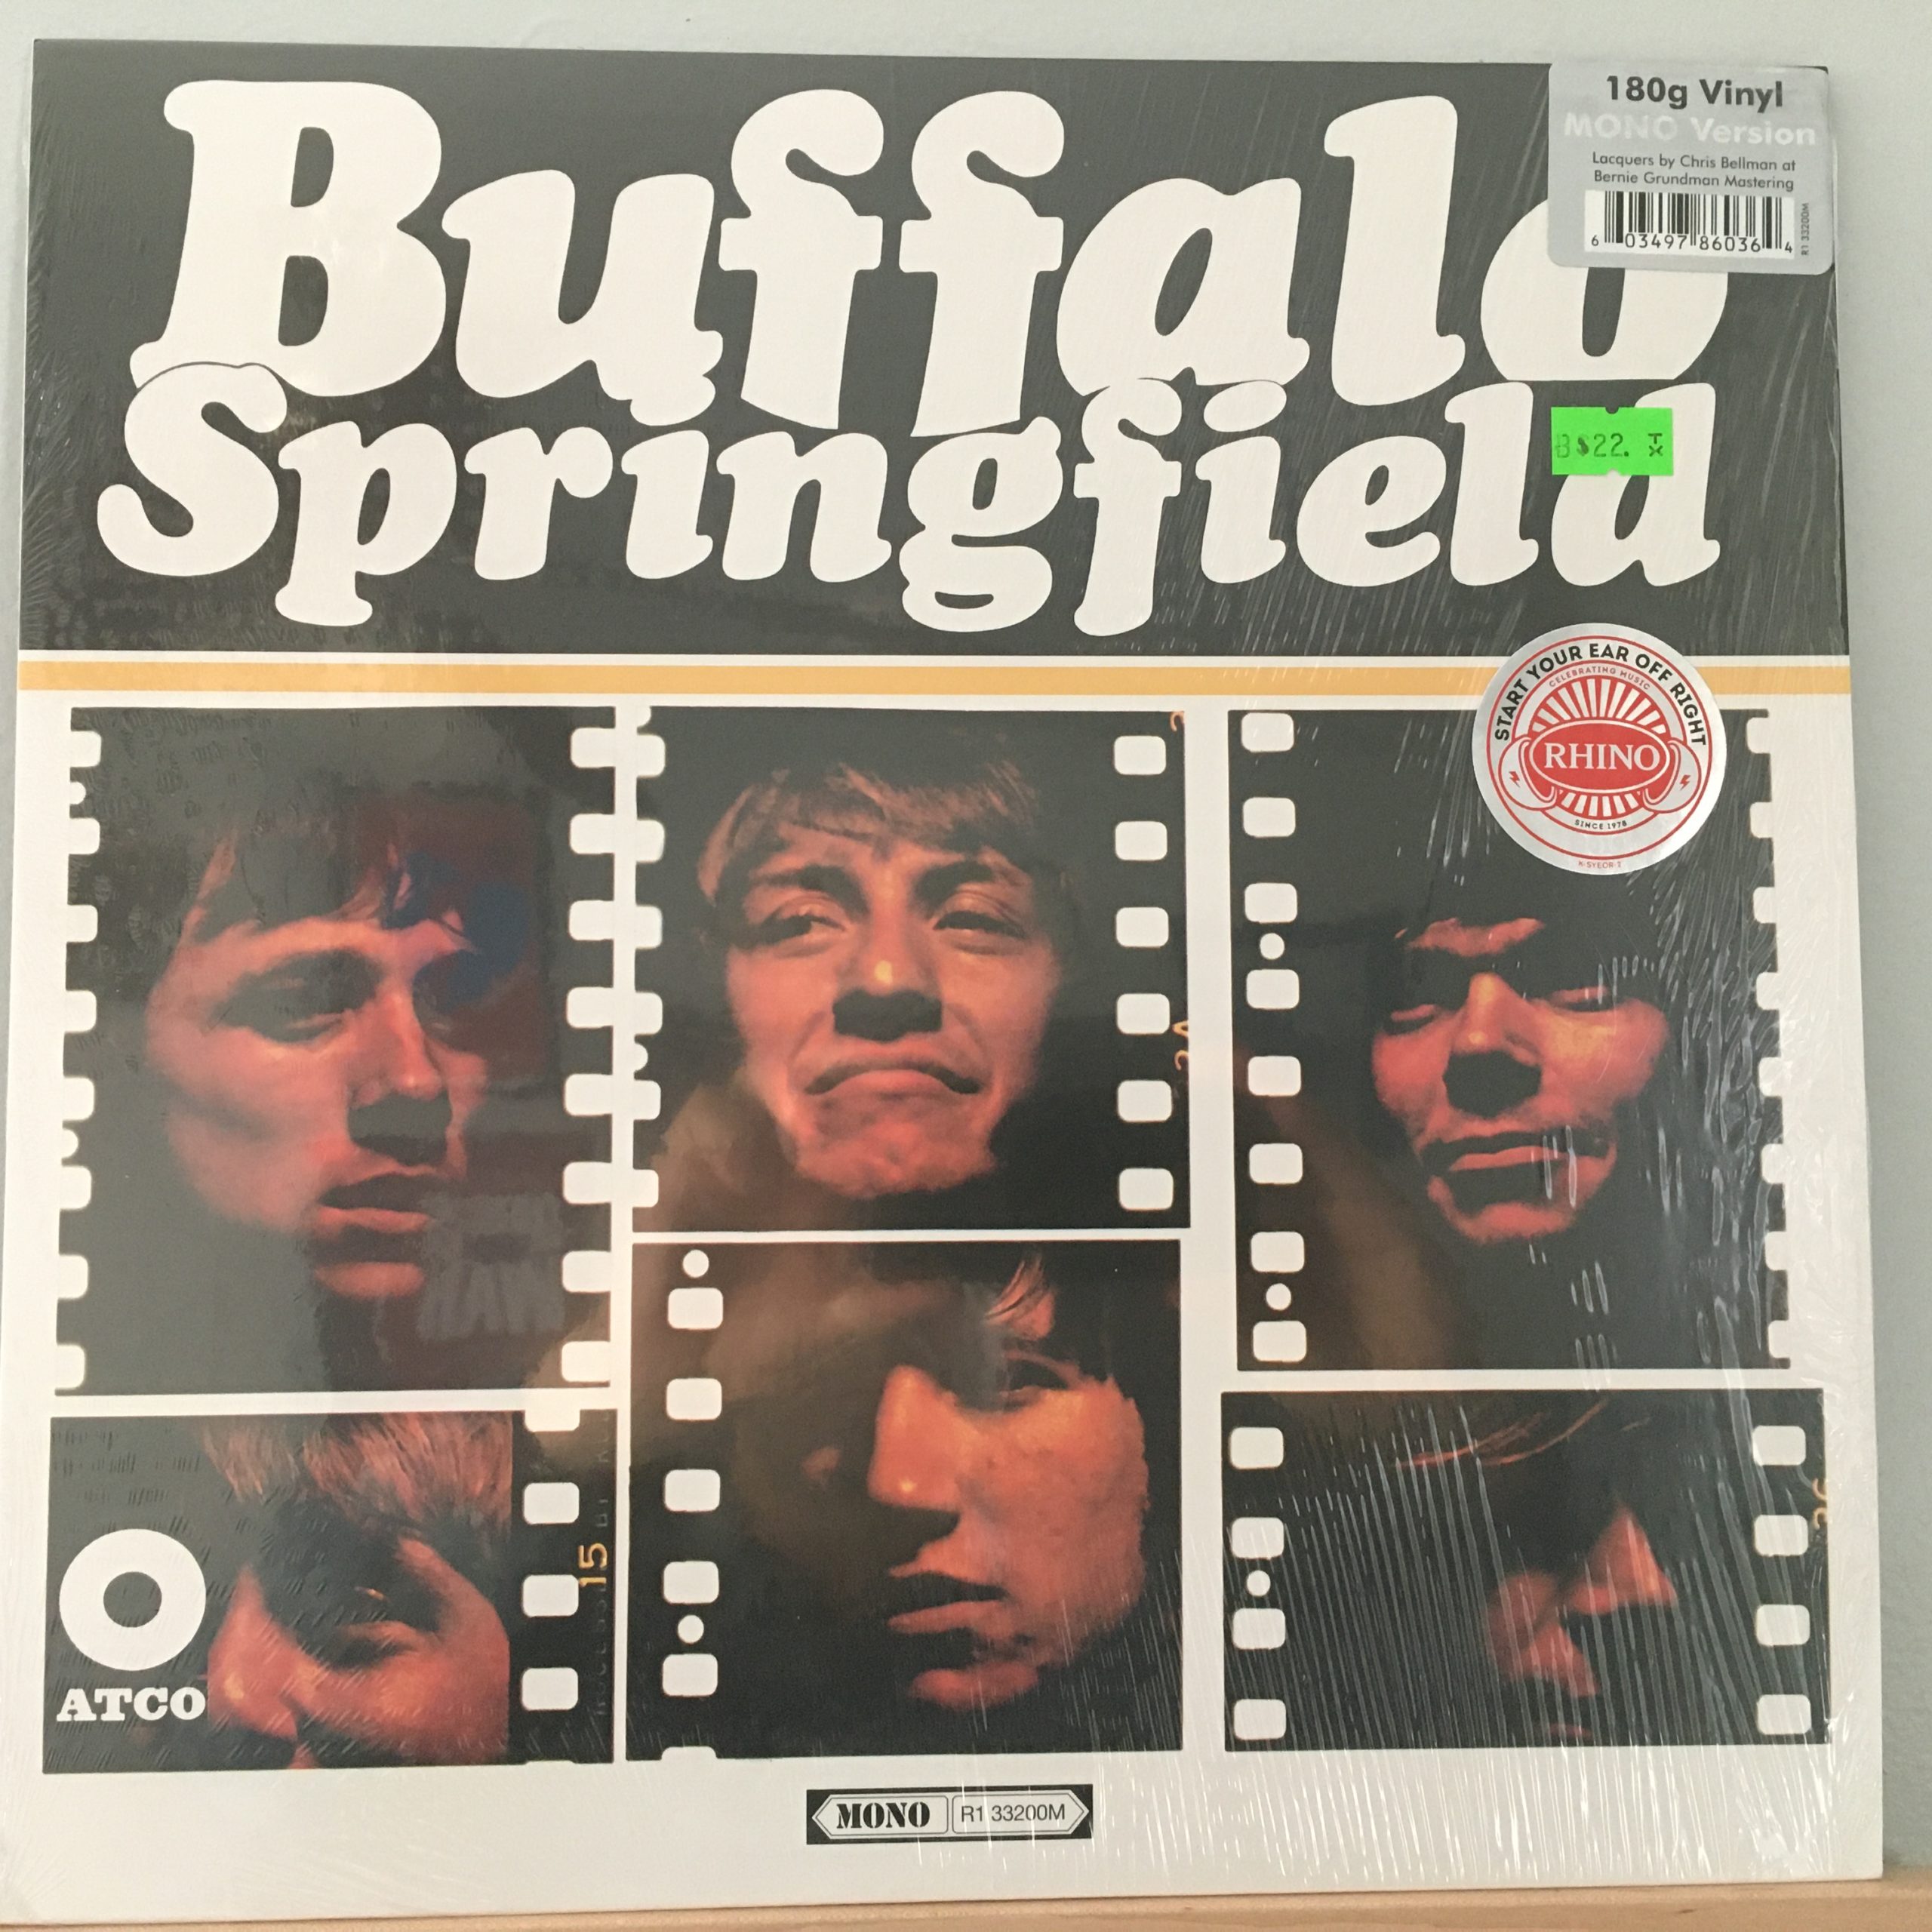 Buffalo Springfield front cover